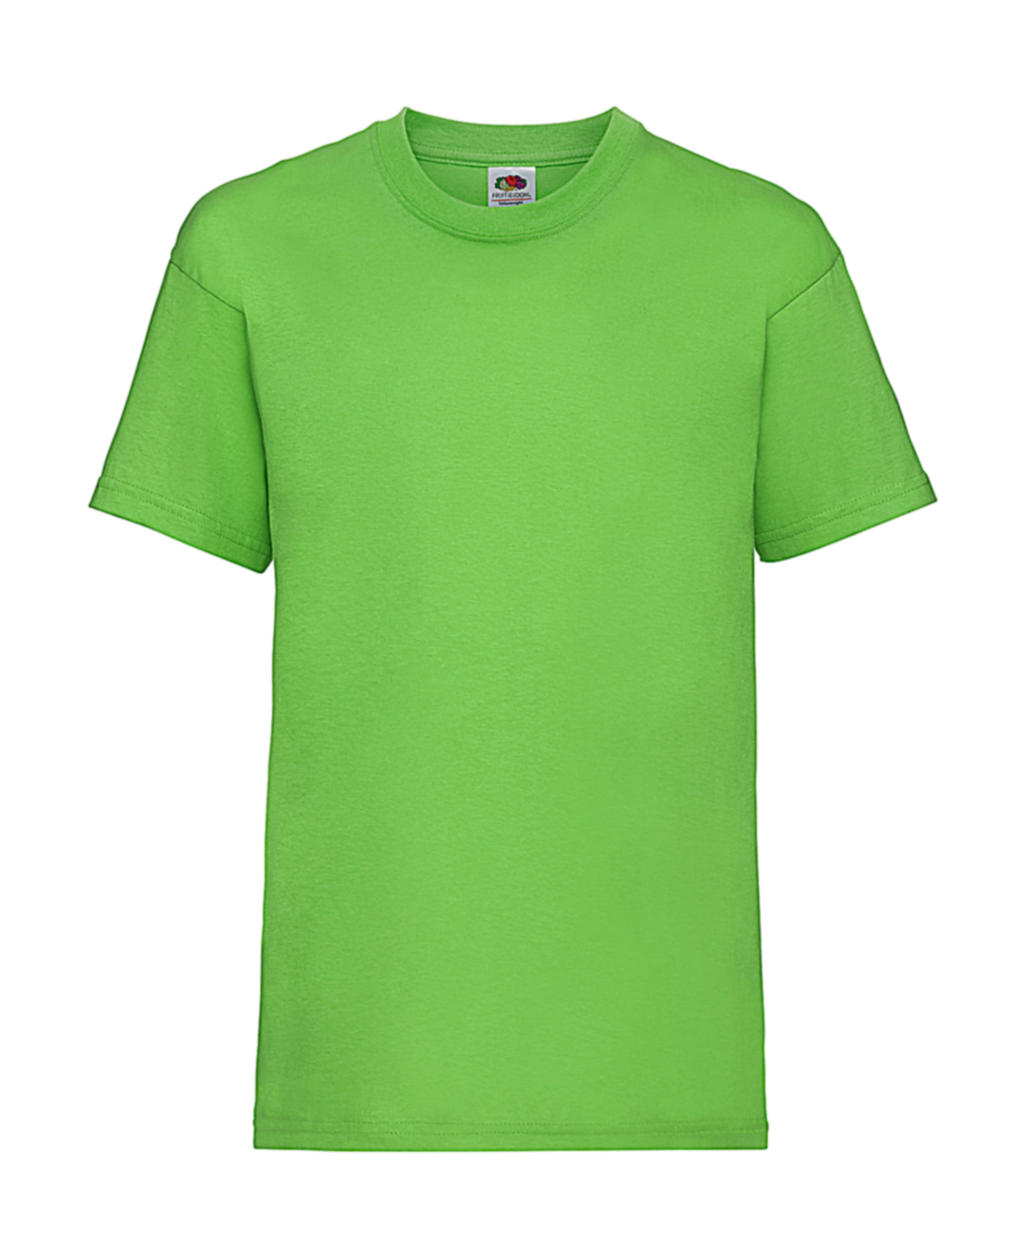 LOOM 61-033-0 Valueweight | OF T-Shirts eBay Tee THE NEU FRUIT Pack Kinder 10er Kids